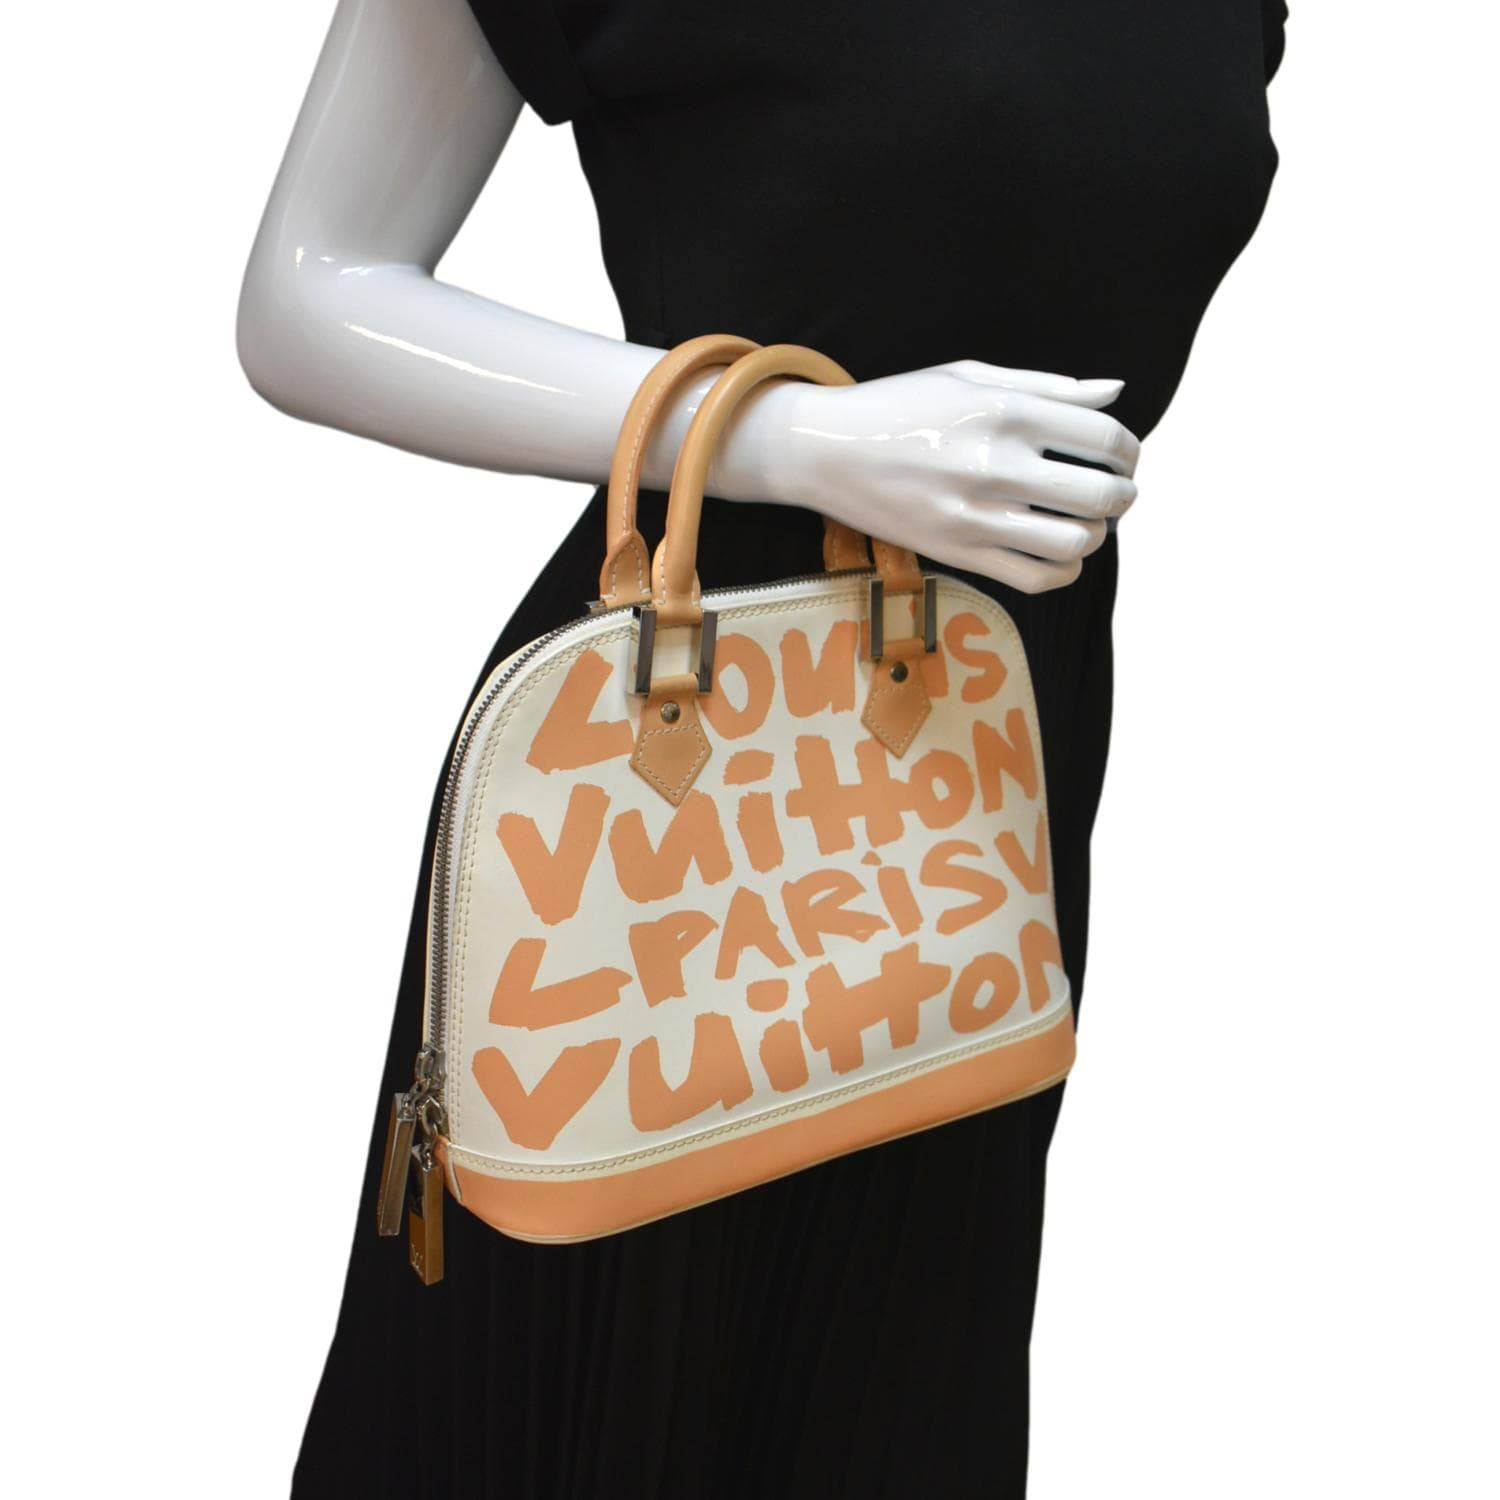 Alma graffiti leather handbag Louis Vuitton Black in Leather - 34603902